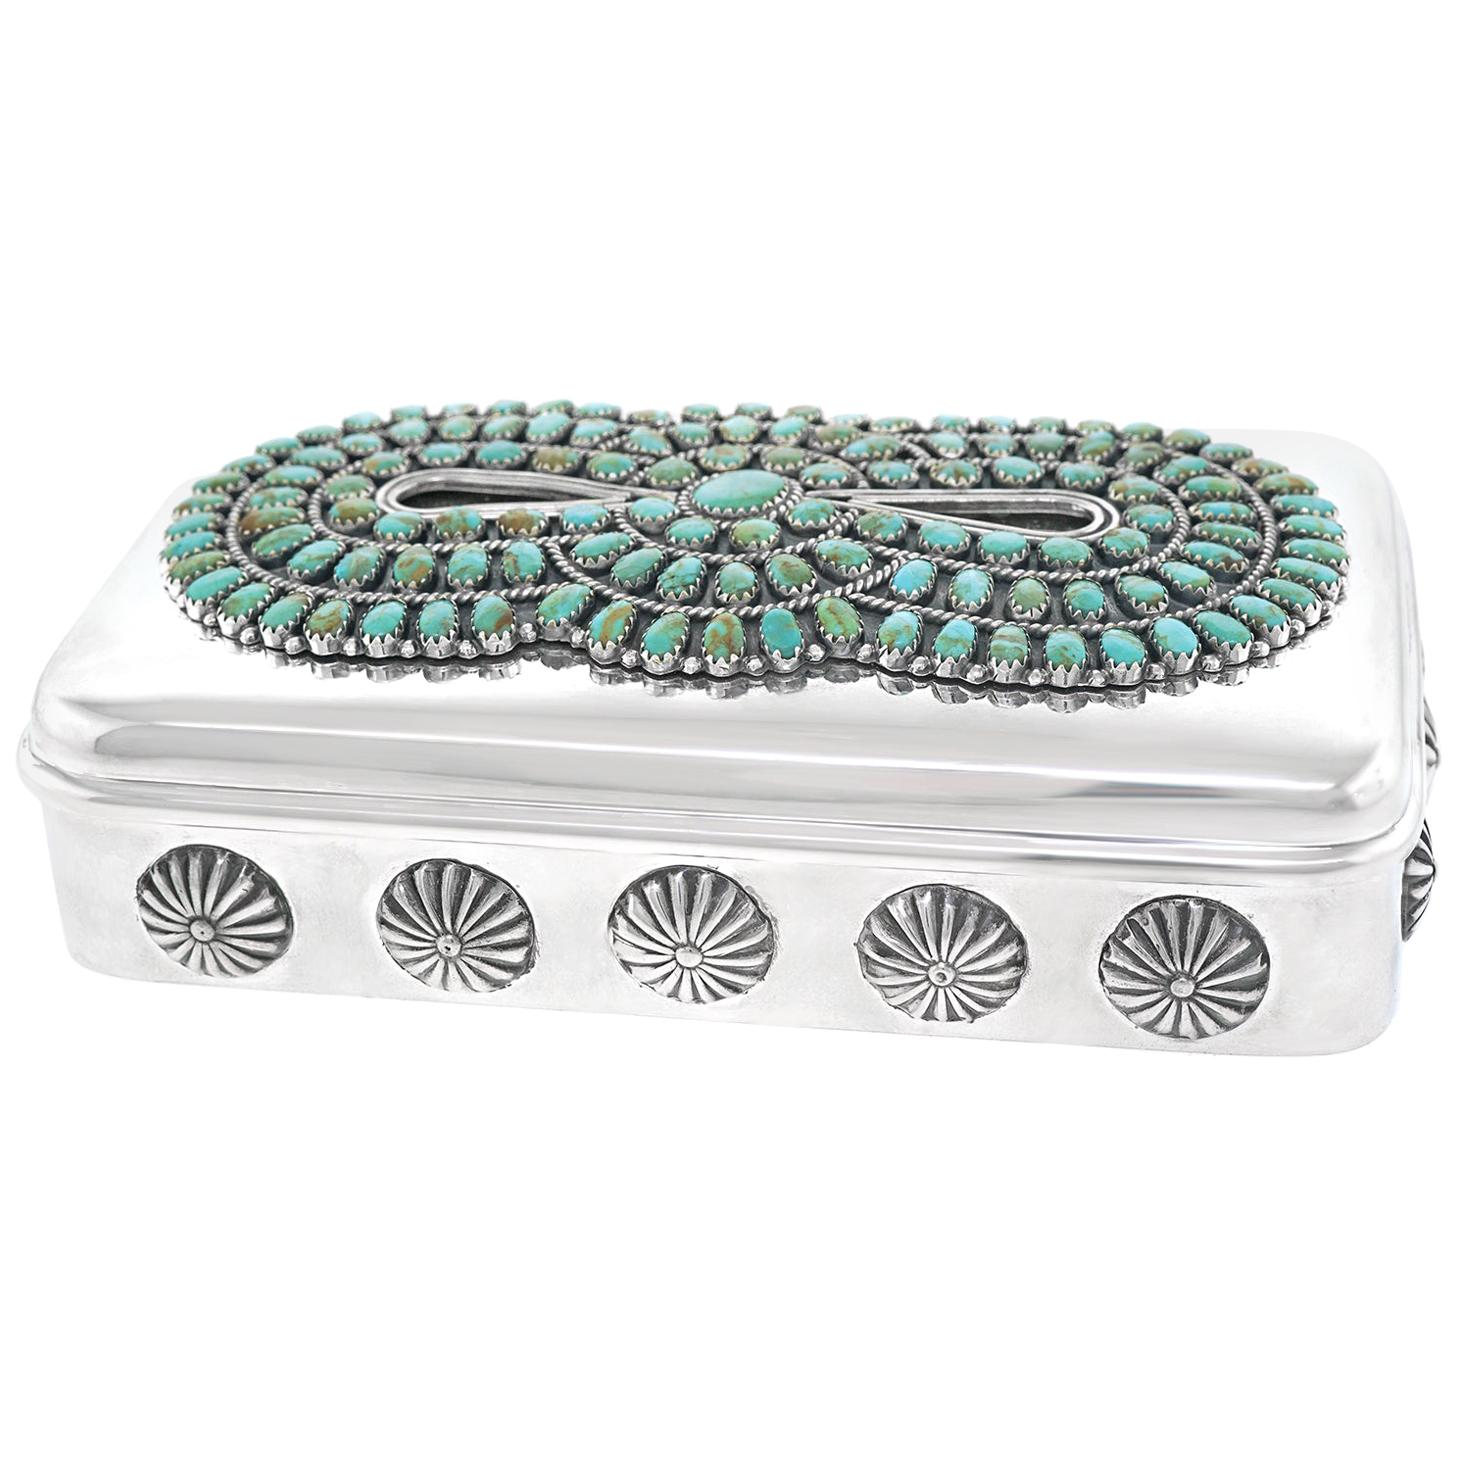 Tiffany & Co. Dekorierte Navajo-Element-Schachtel aus Sterlingsilber